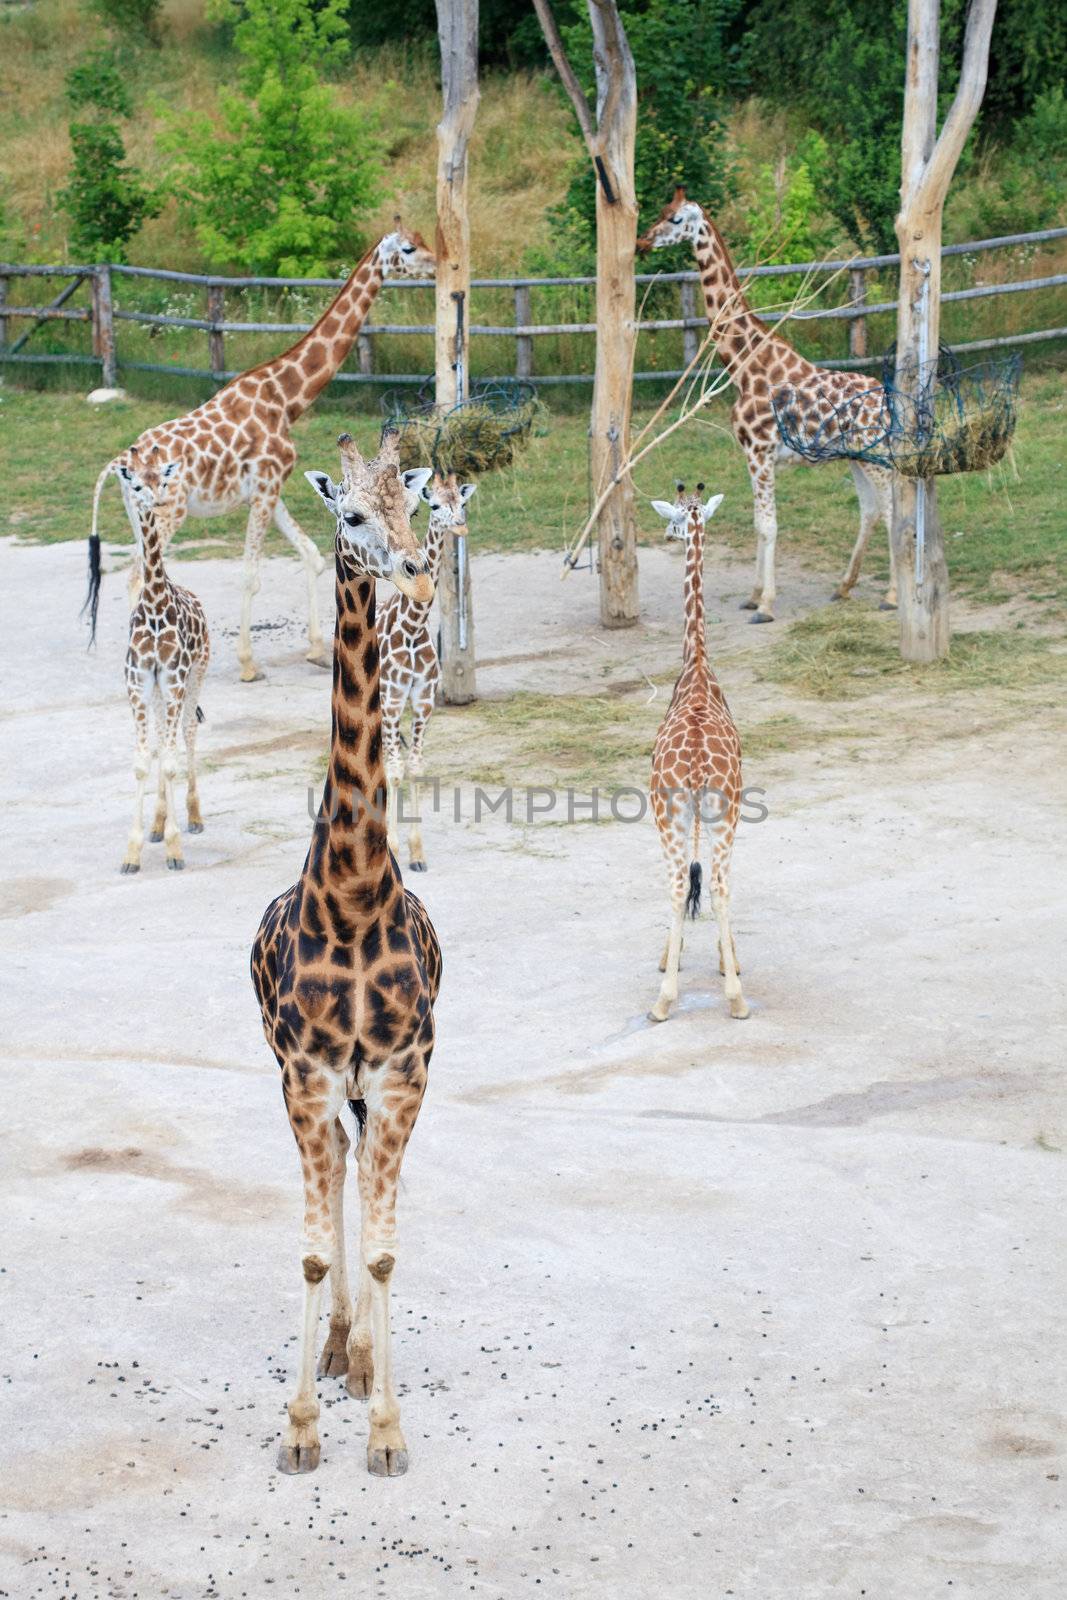 giraffes in the savanna by jannyjus